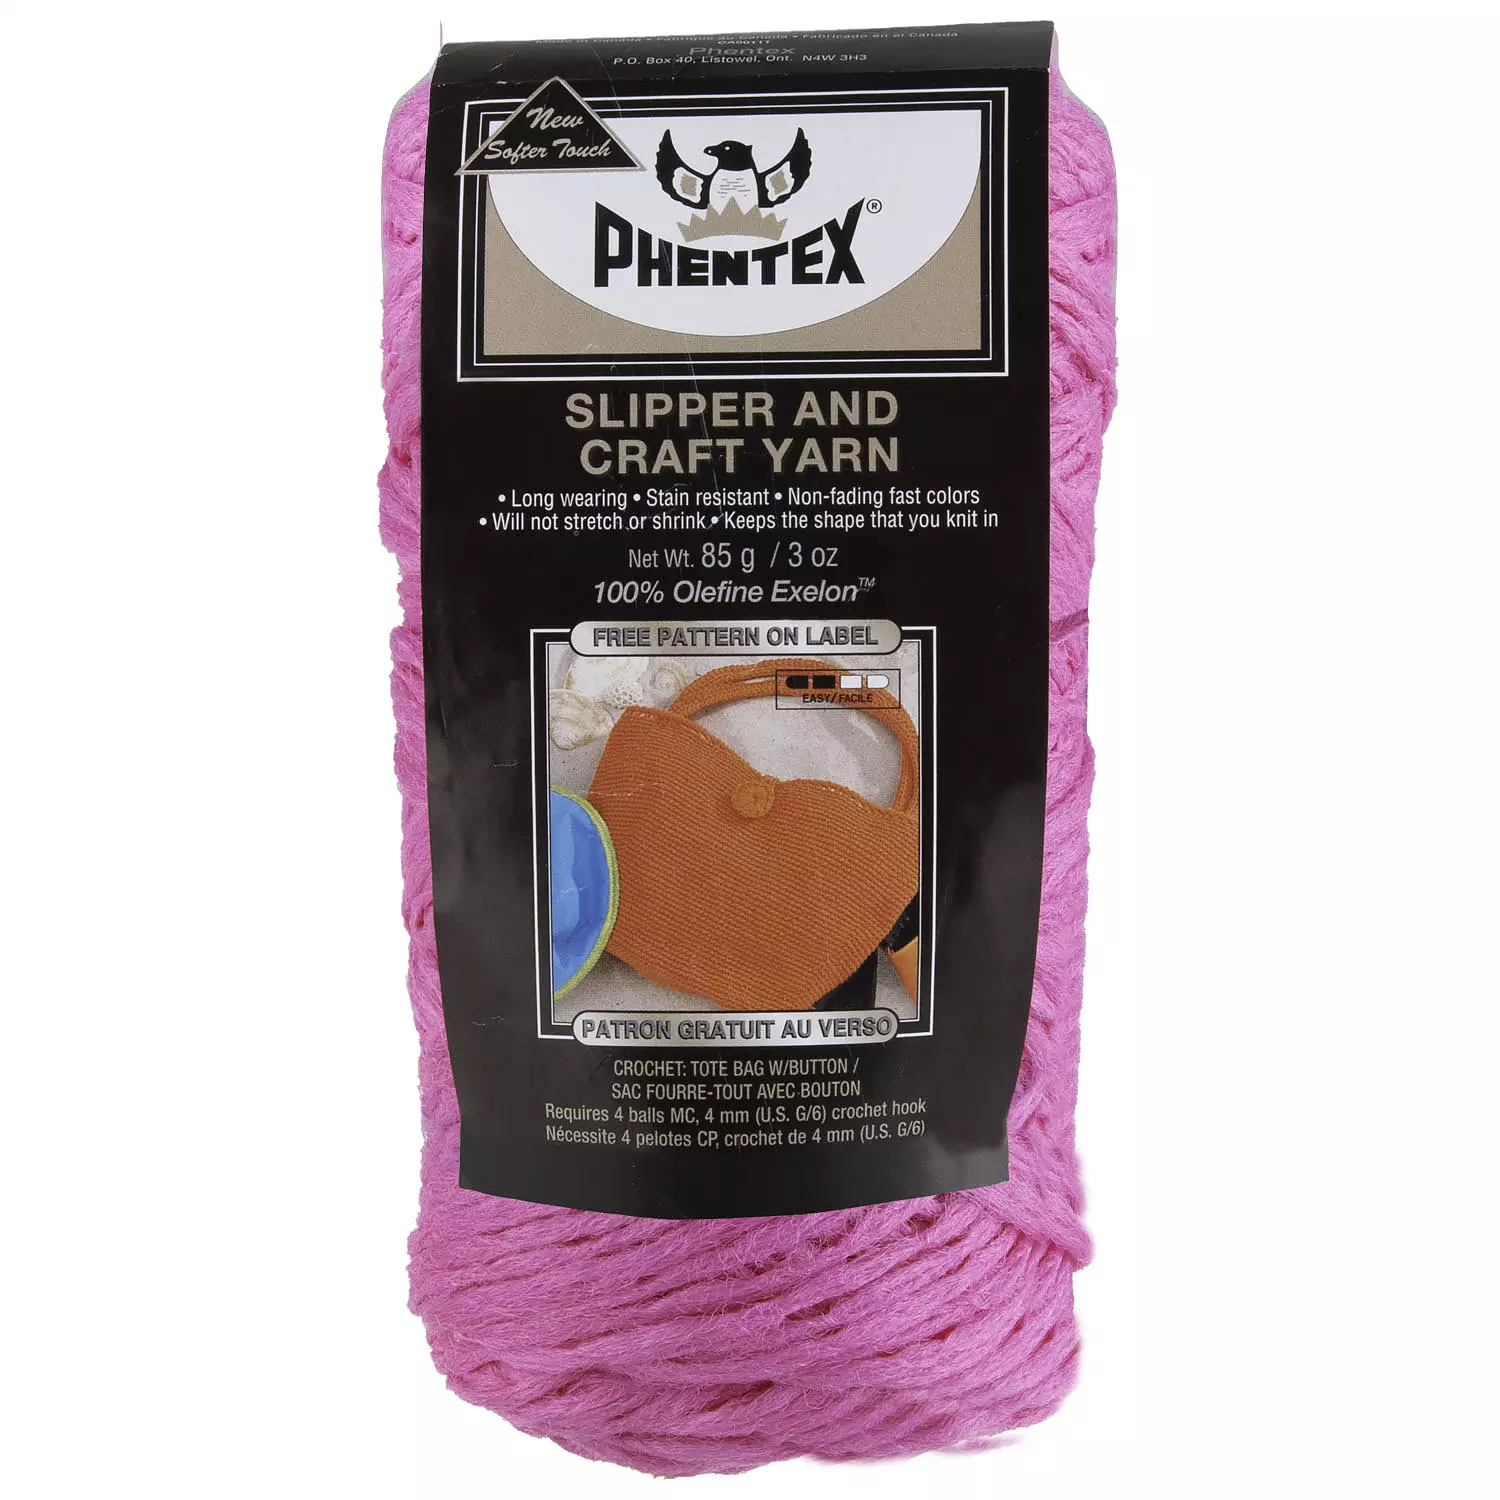 Phentex - Slipper and craft yarn, hot pink